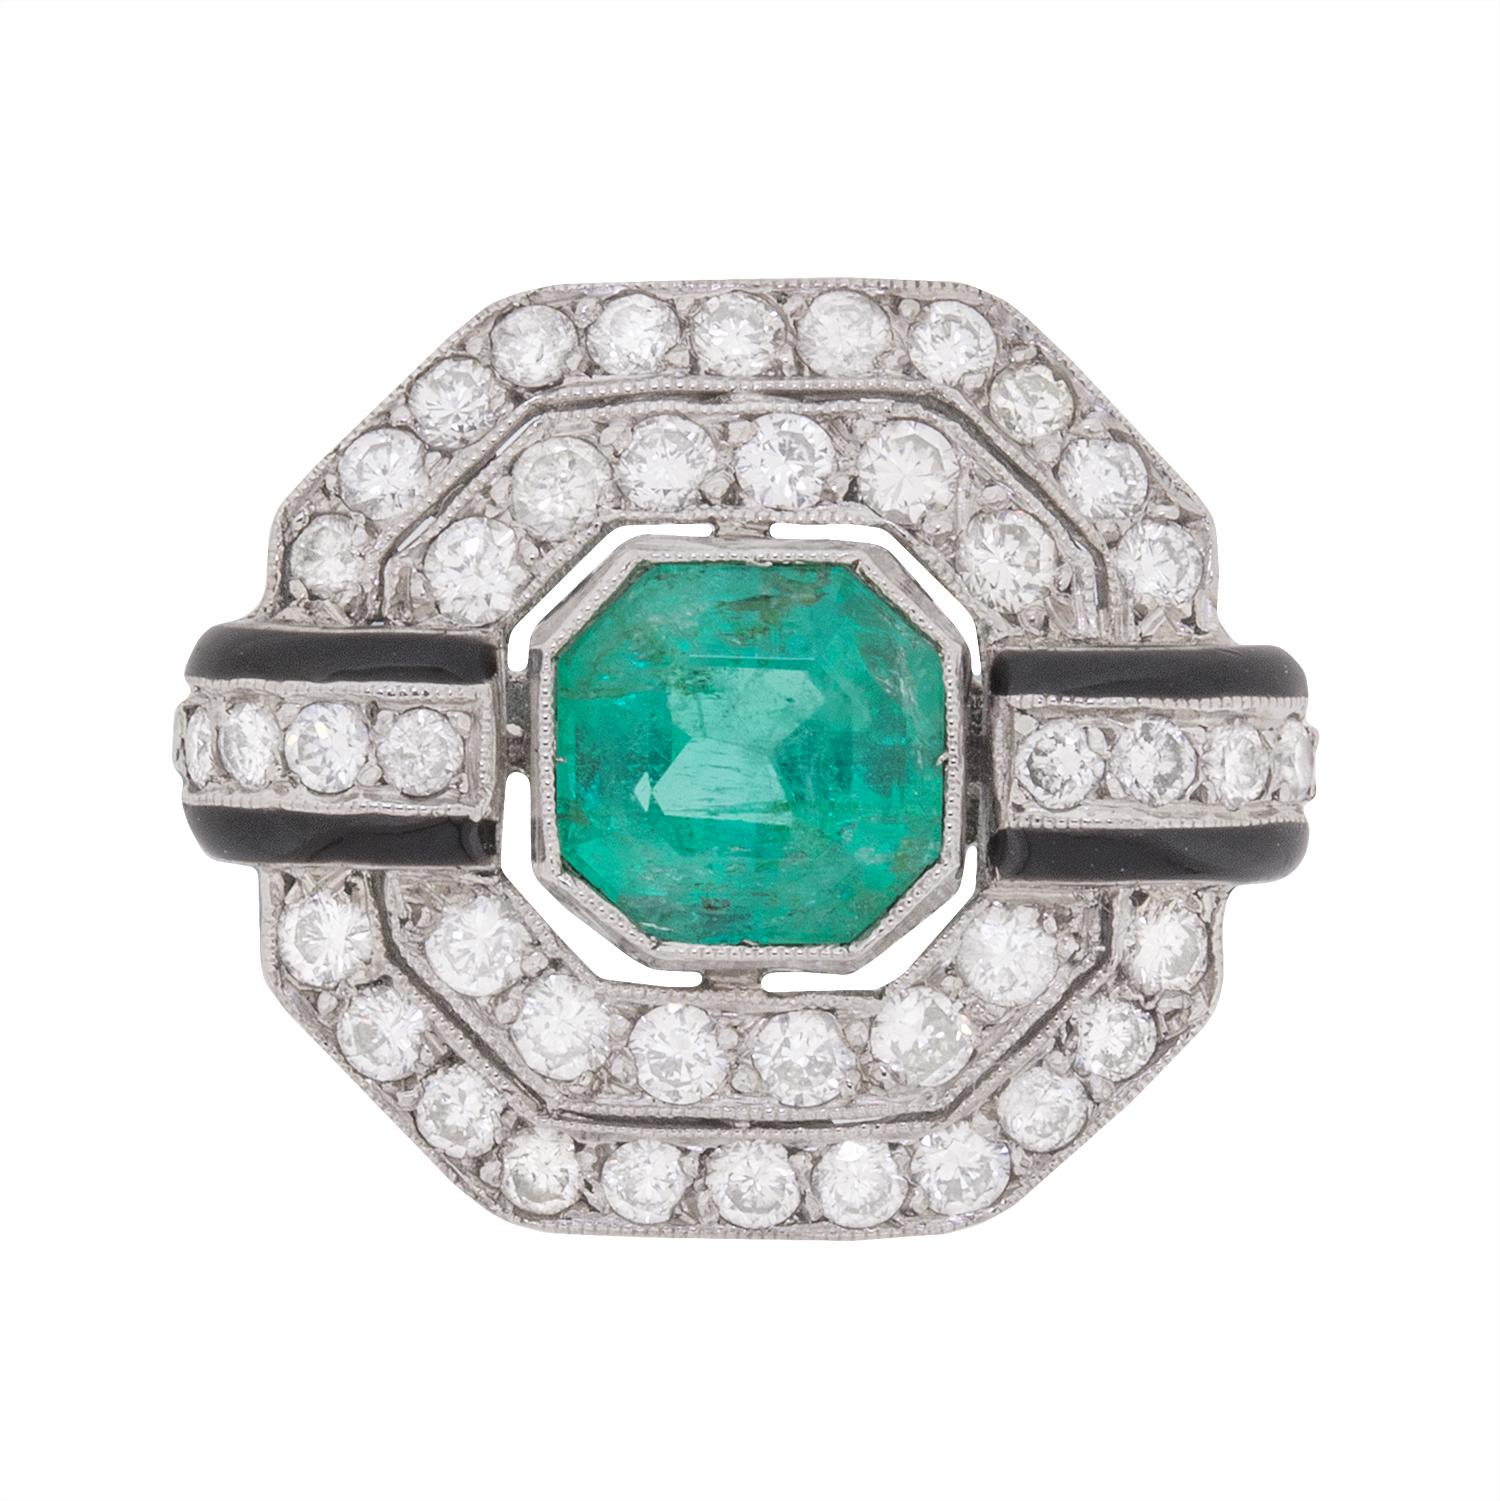 Vintage Emerald, Diamond and Black Enamel Cluster Ring, circa 1950s